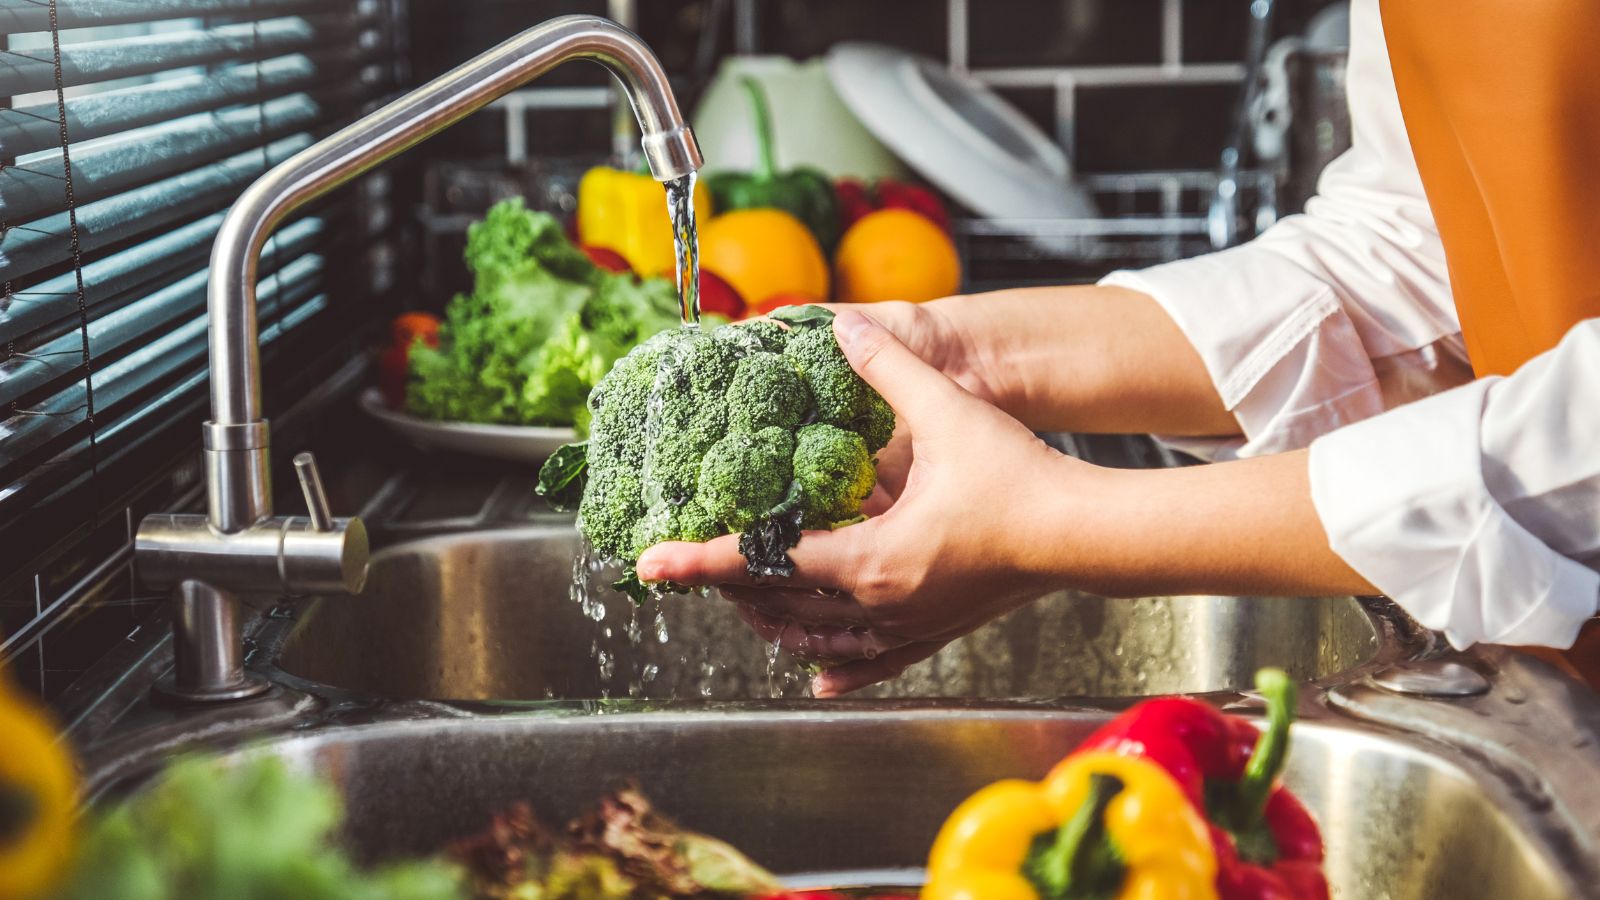 Better Life Produce Wash for Fruits & Vegetables